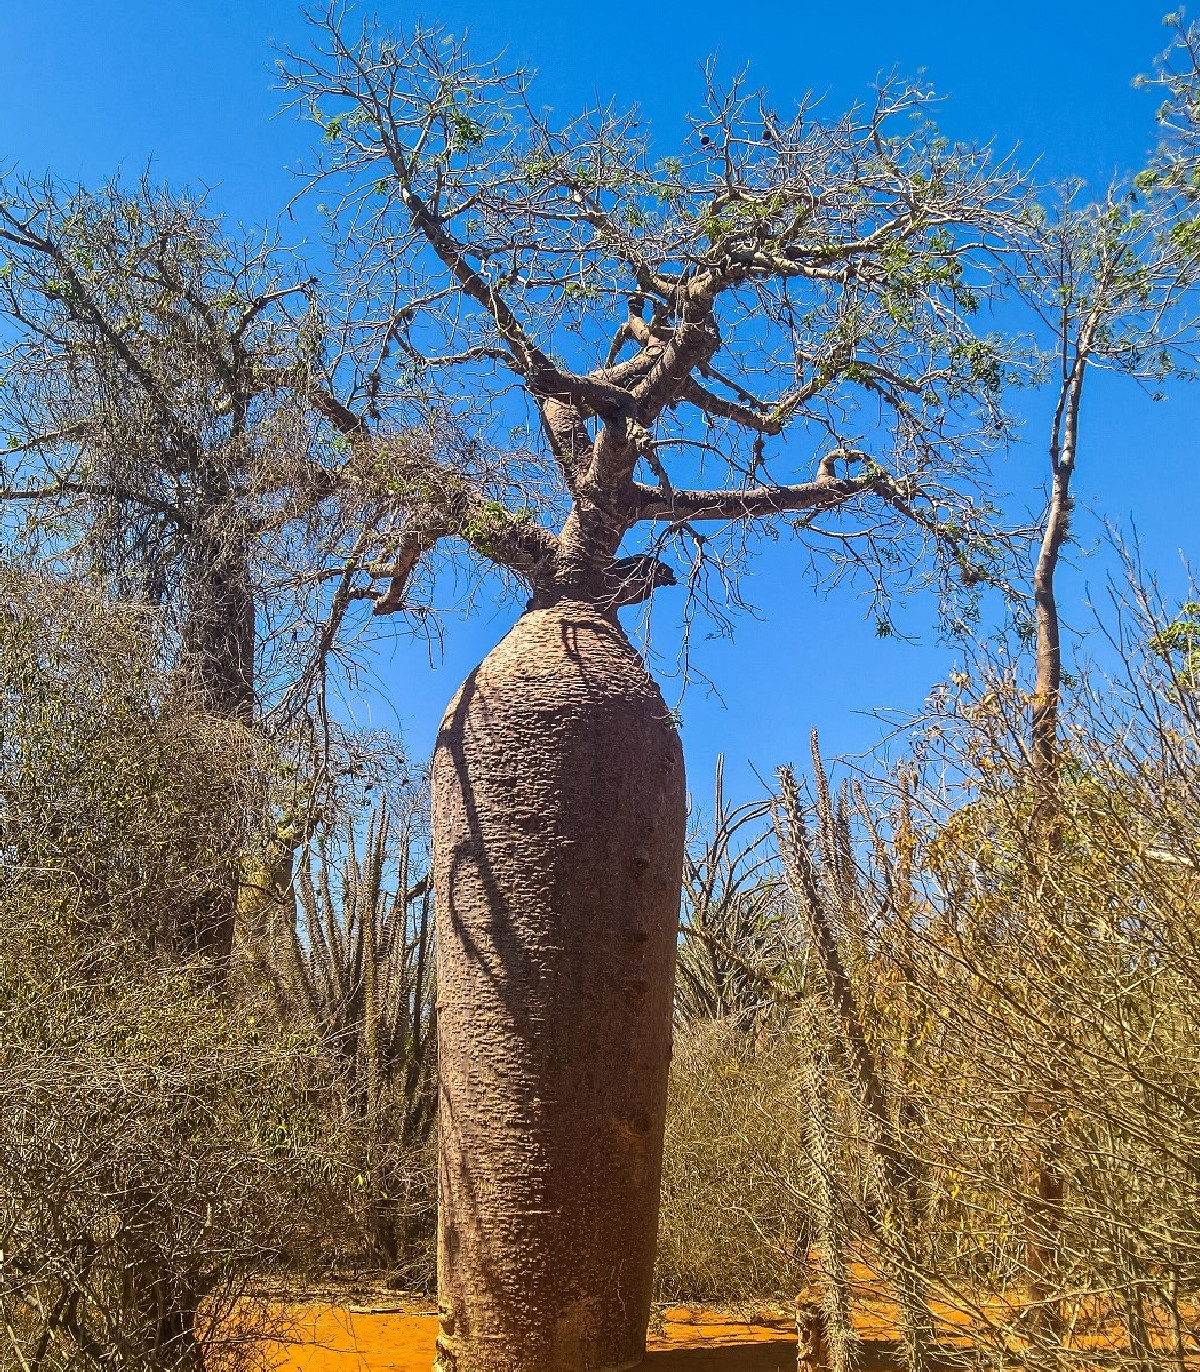 Baobab Fony - Adansonia fony - semená - 2 ks